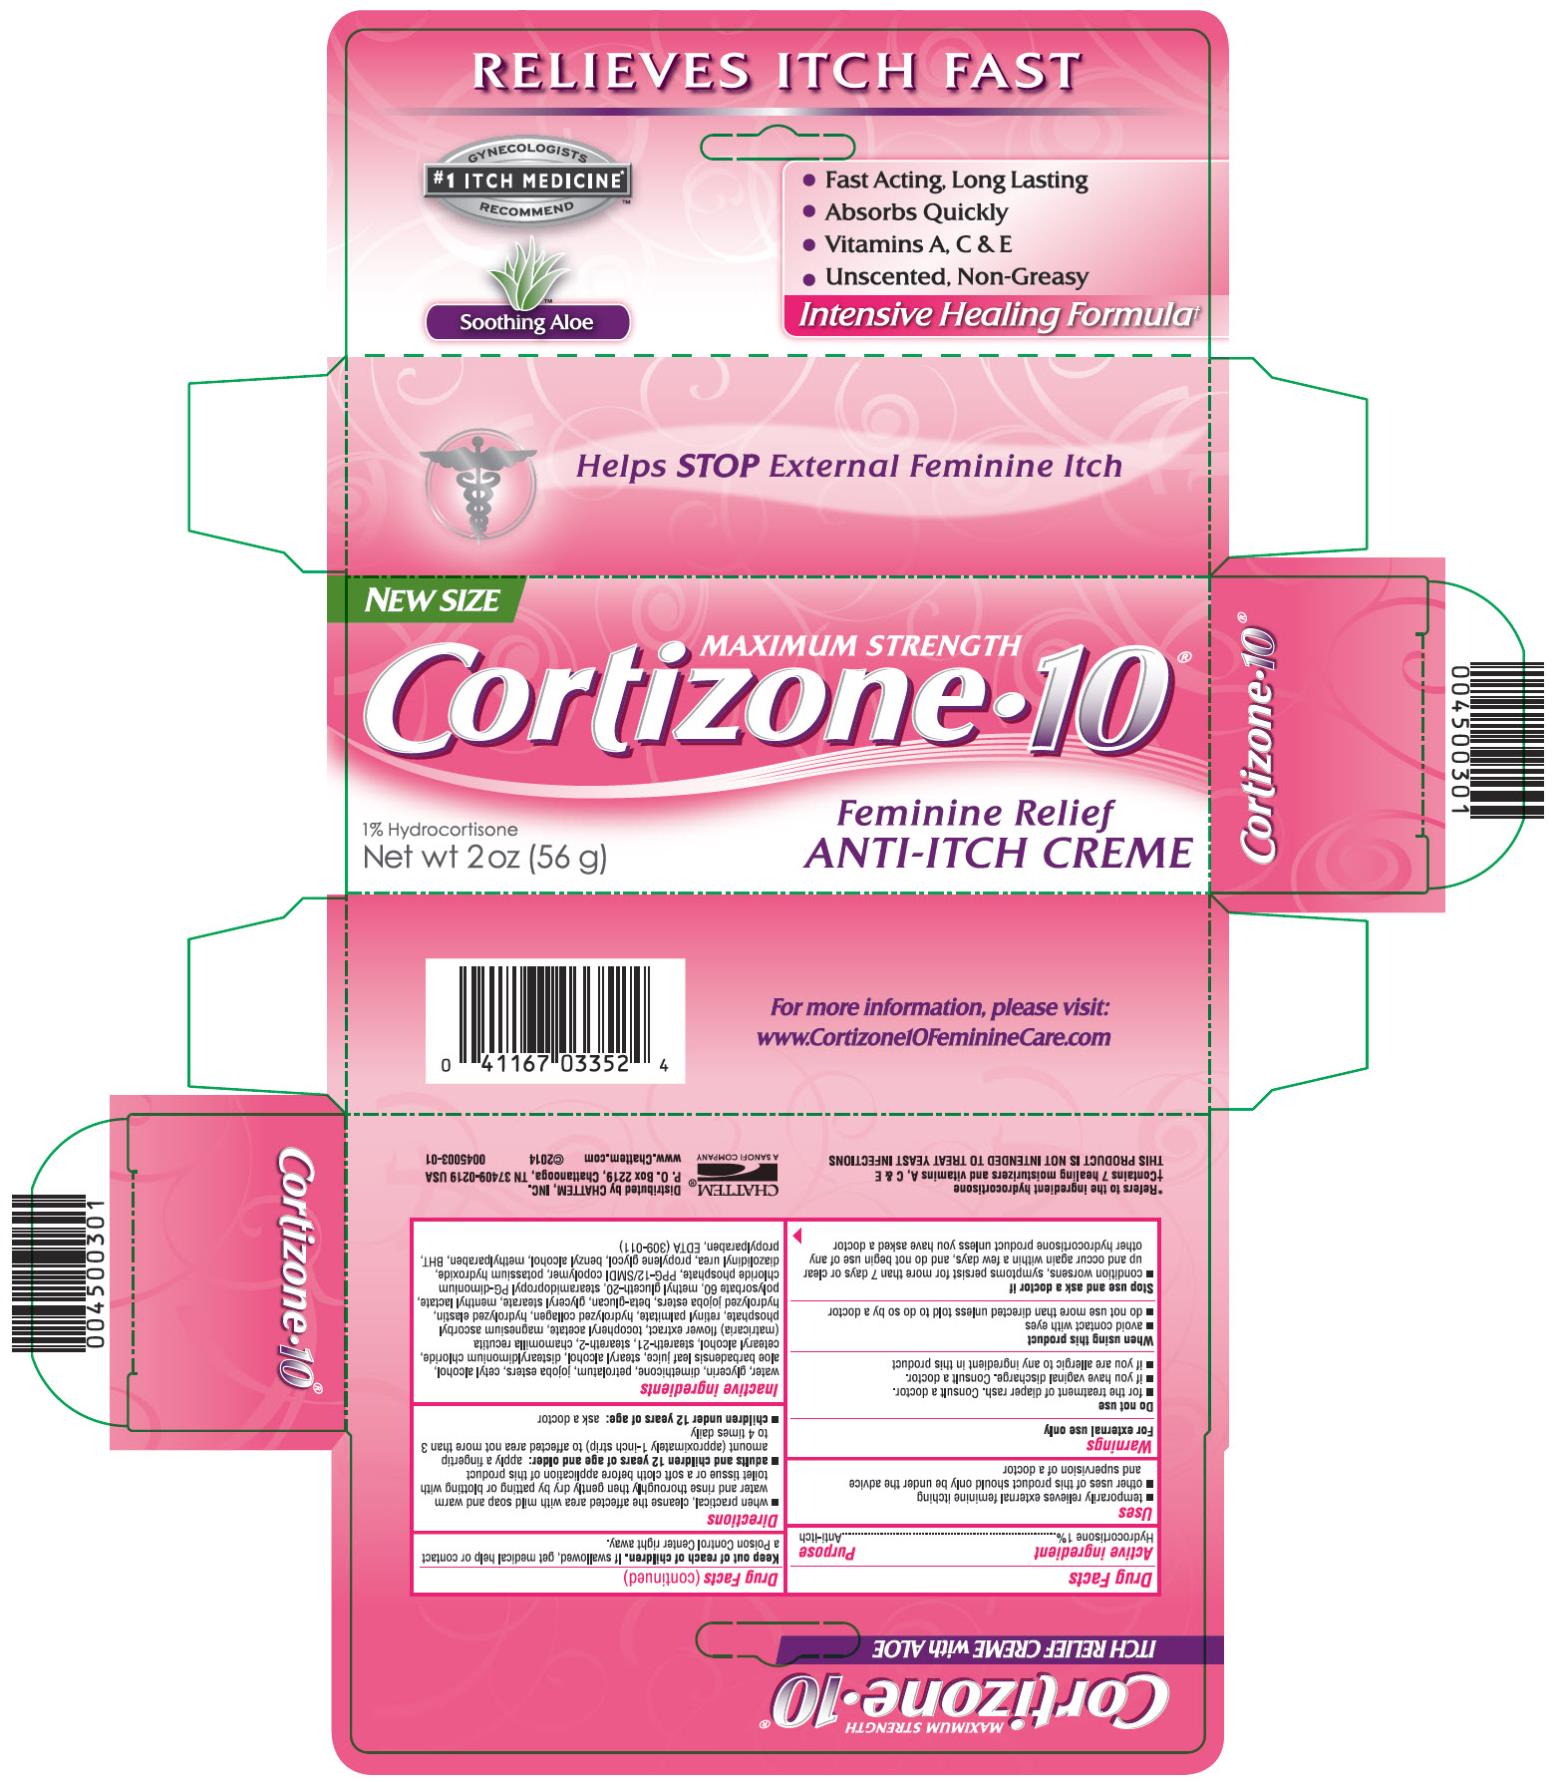 Maximum Strength Cotizone 10® Feminine Relief Anti-Itch Creme 1% Hydrocortisone Net wt 2 OZ (56 g)